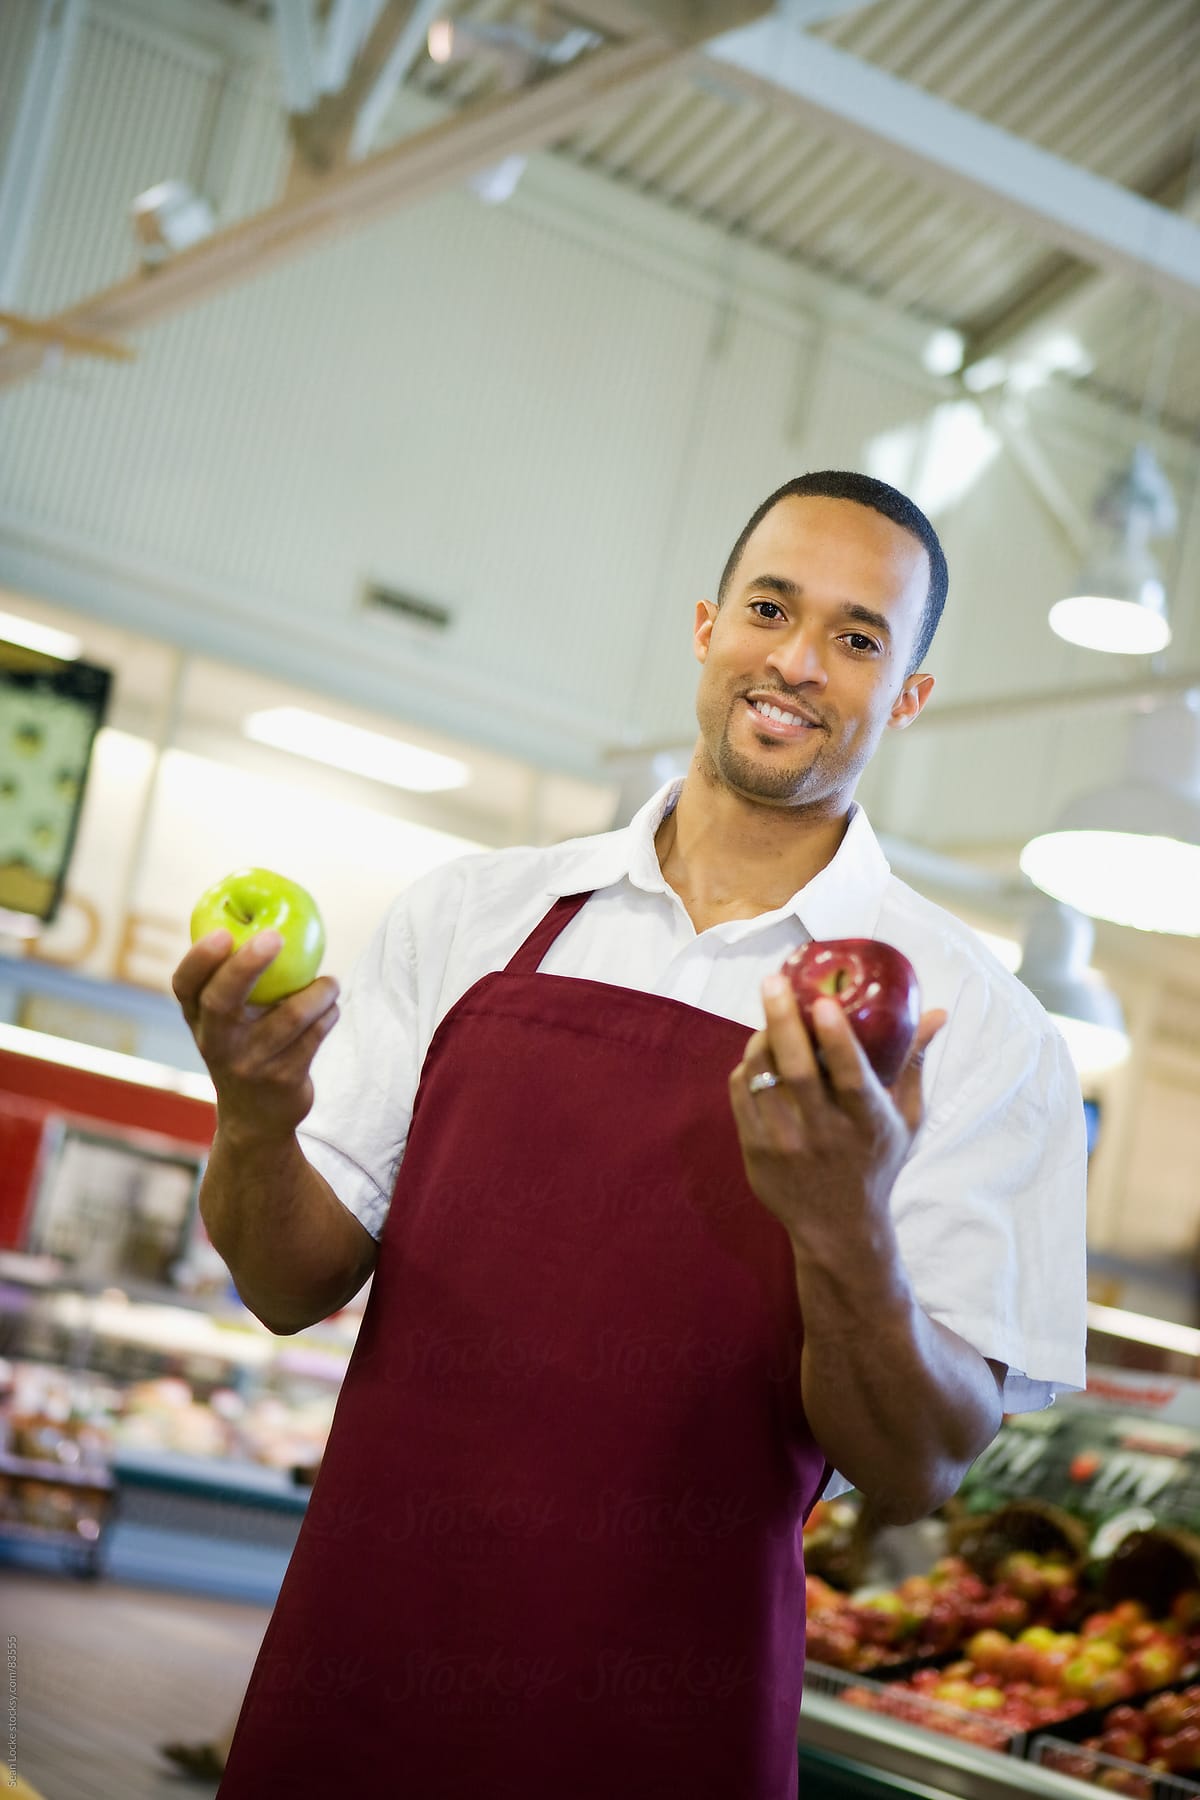 Supermarket: Produce Employee Holding Apples